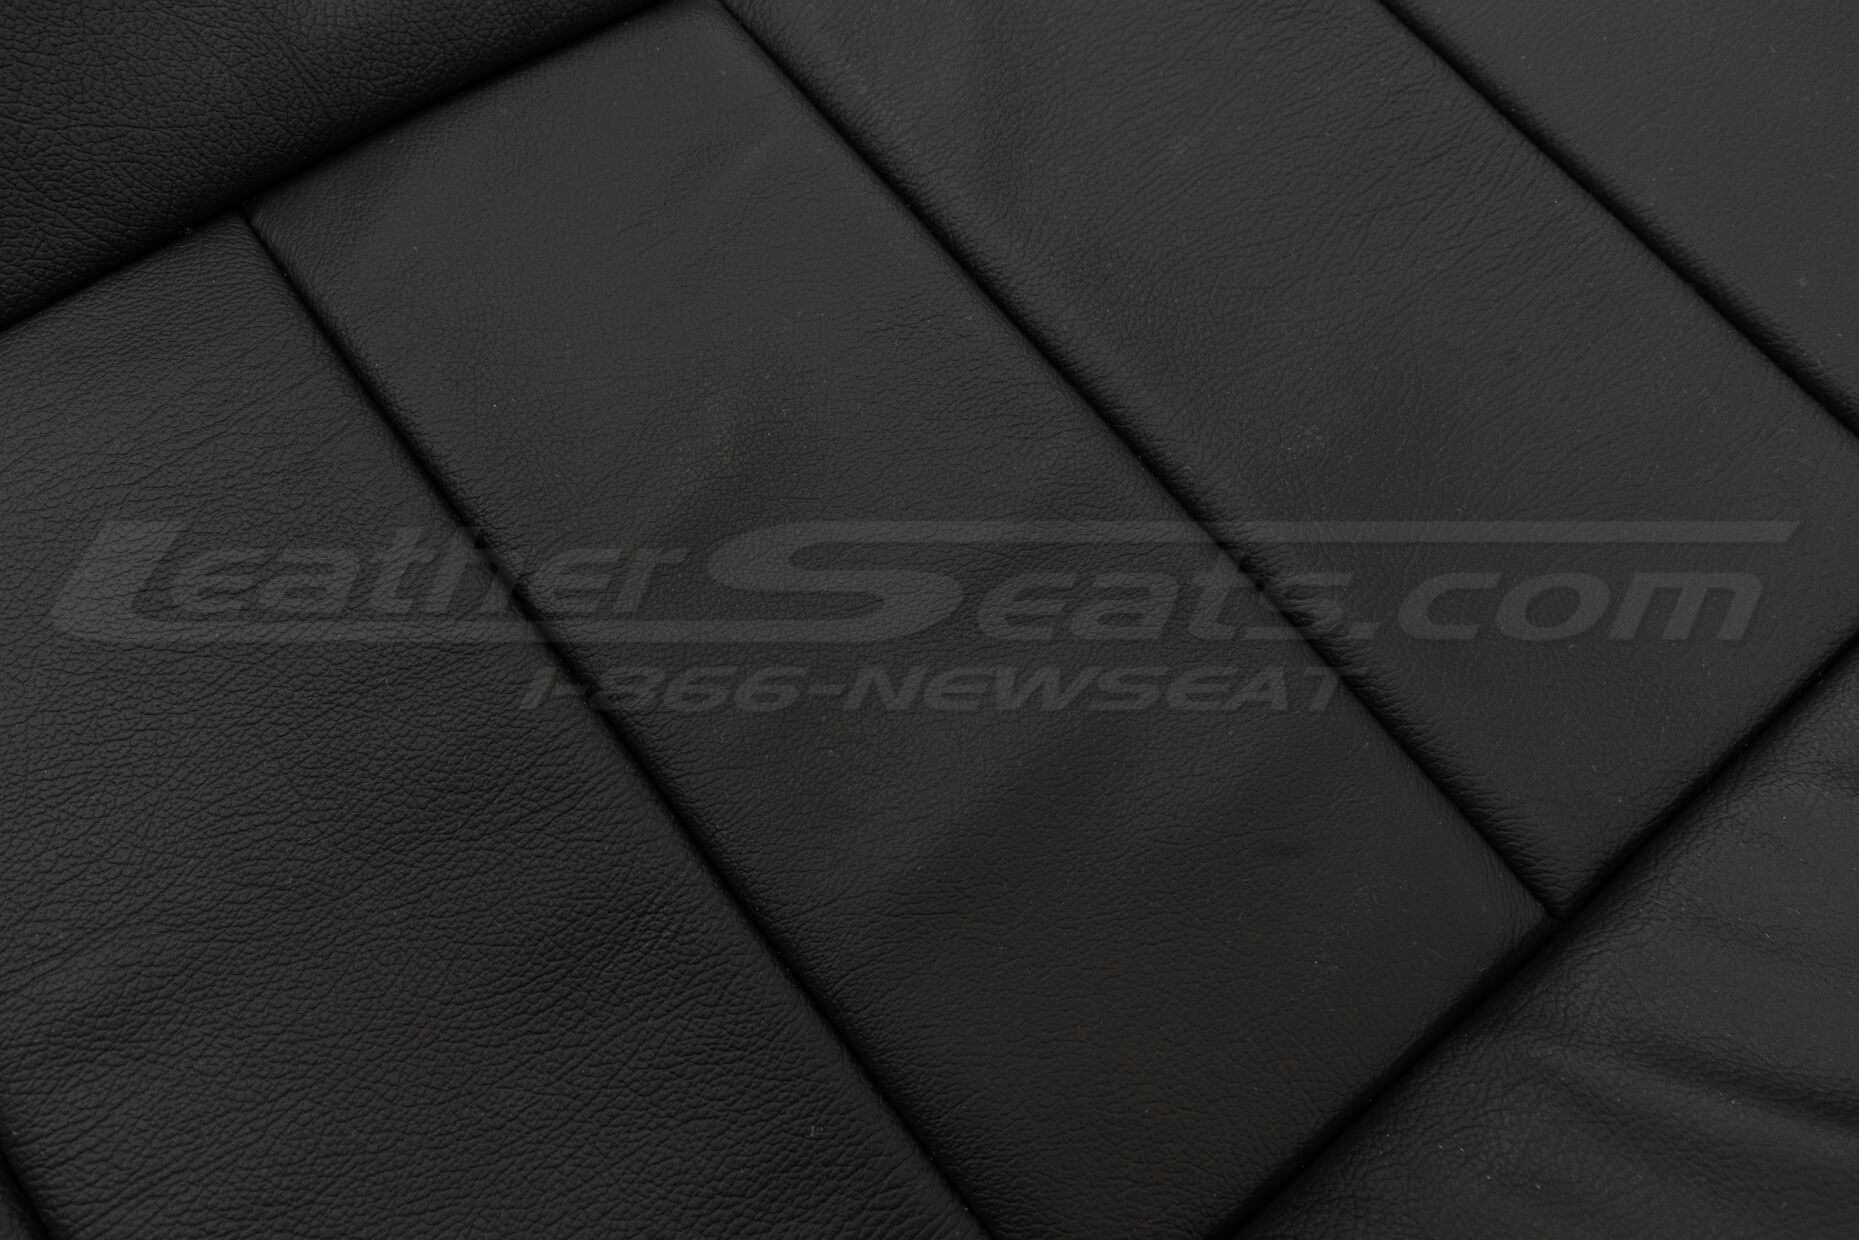 Black leather texture